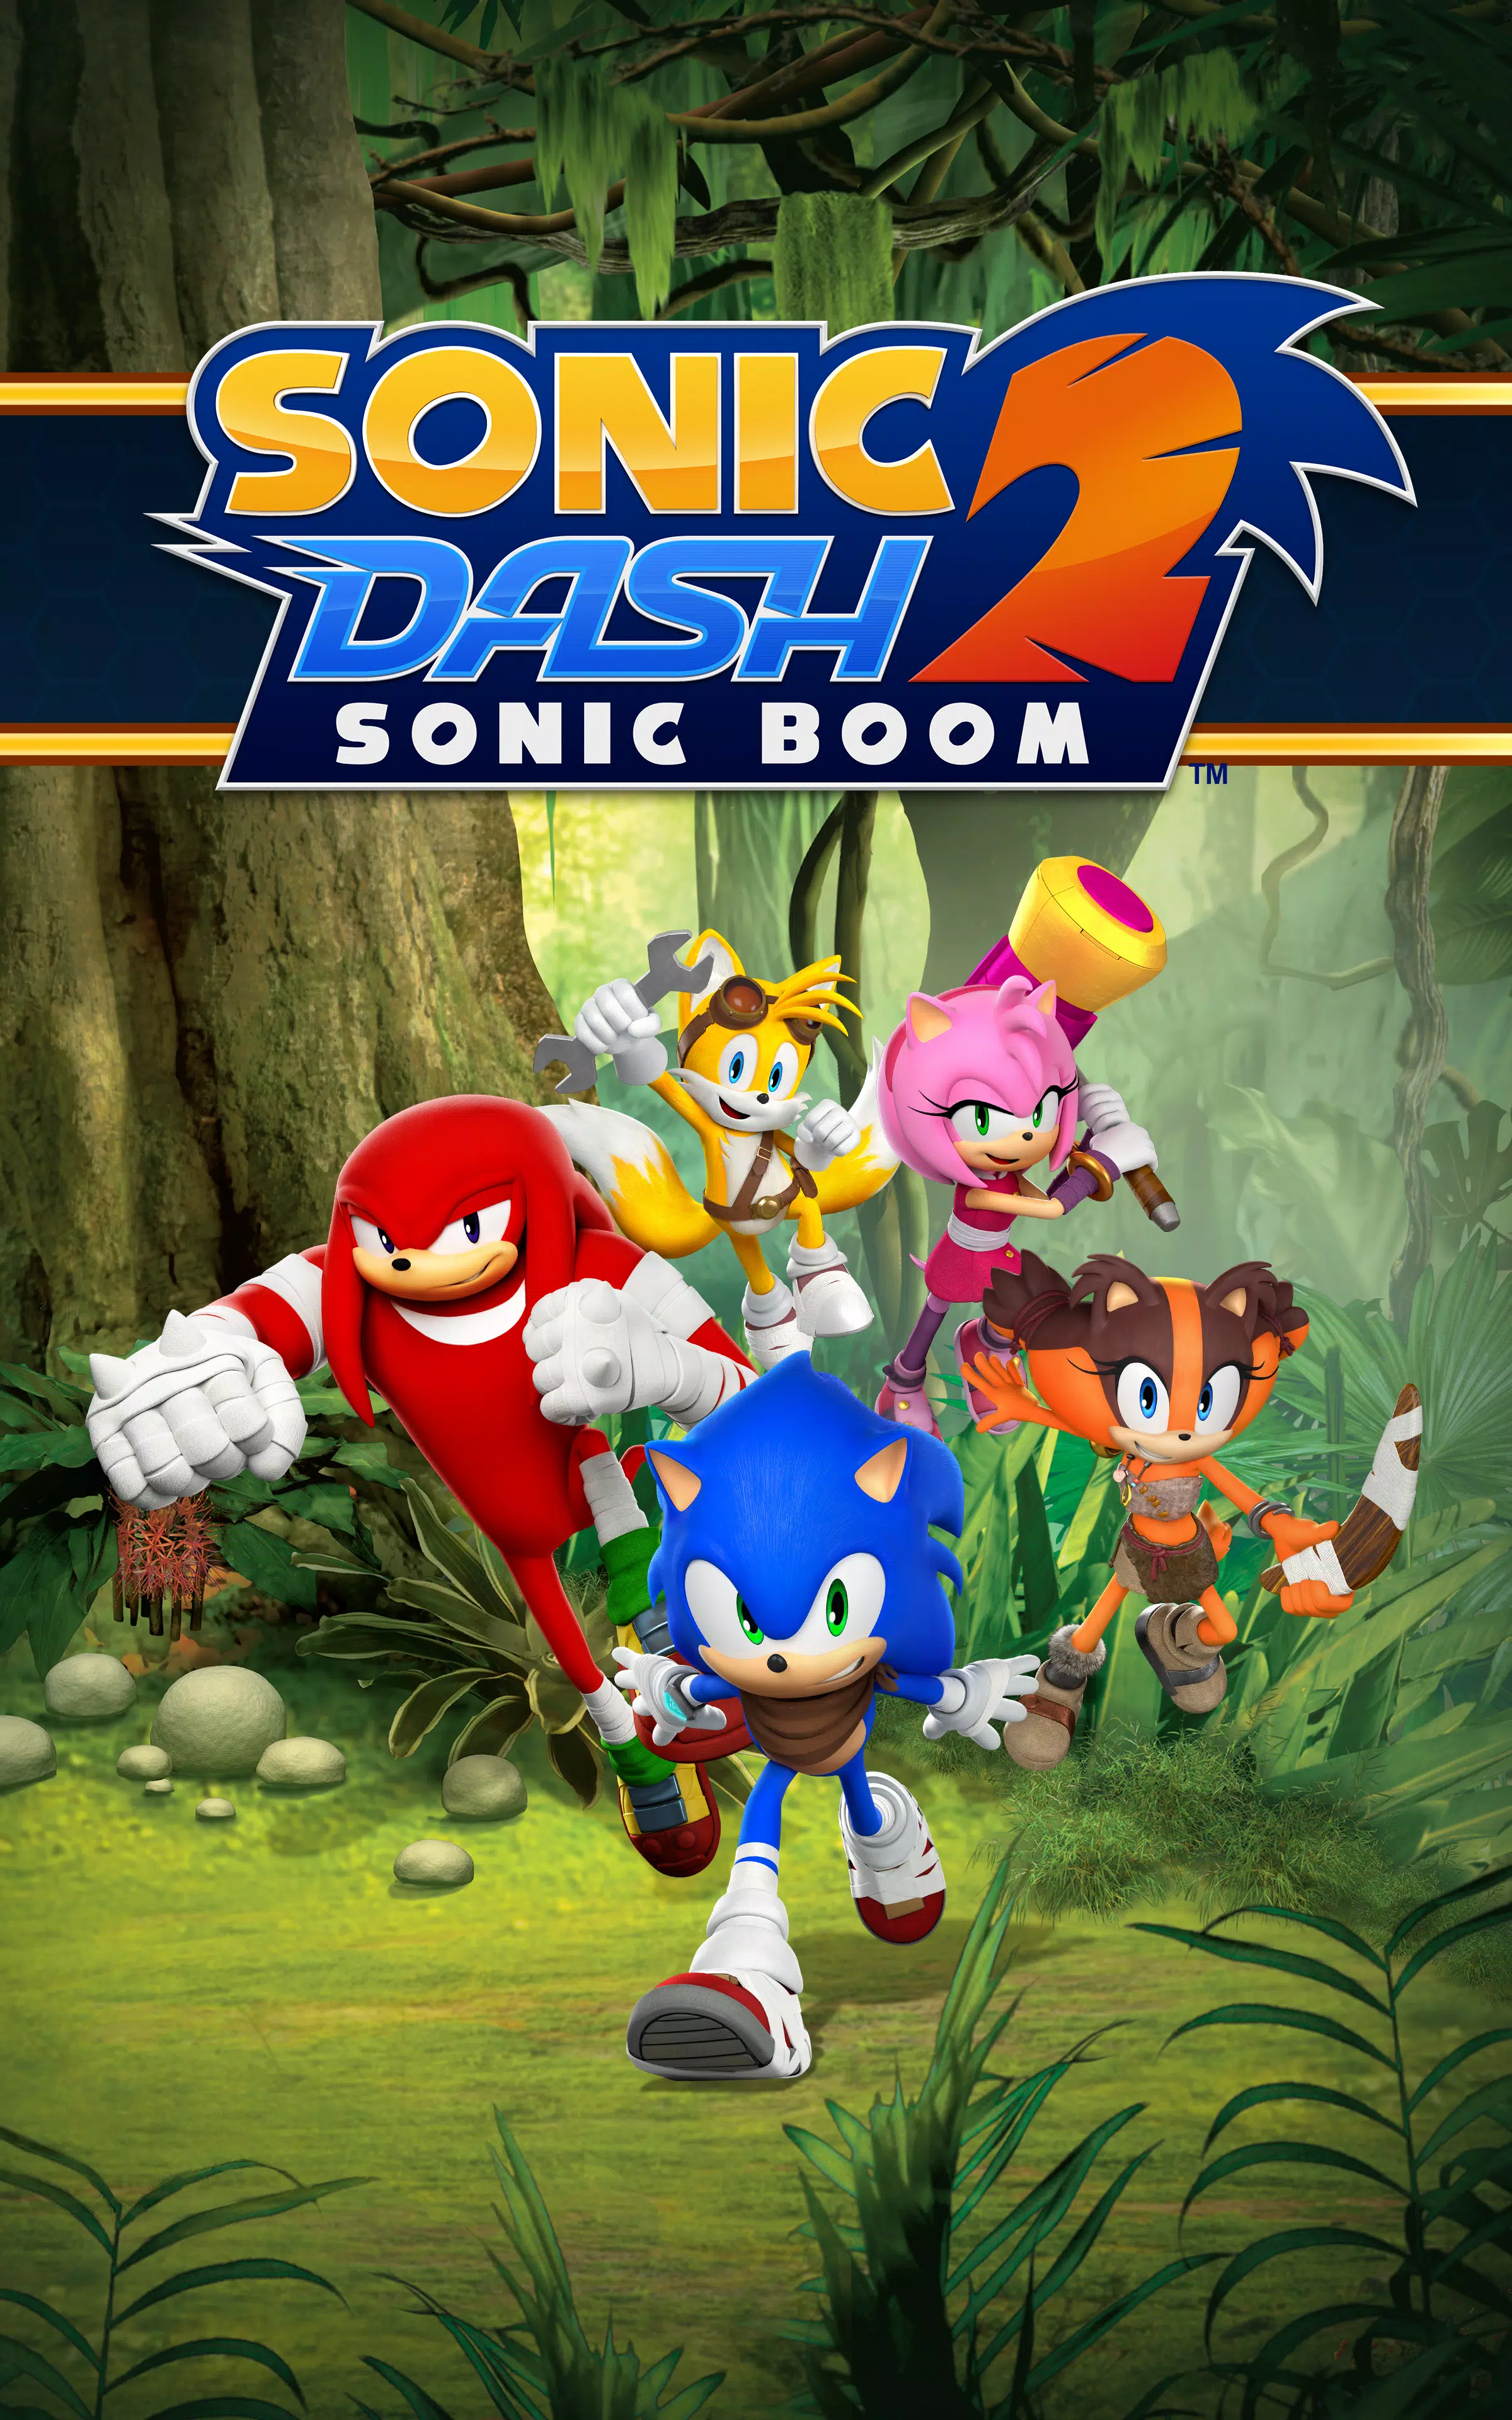 Sonic Boom: Desenho